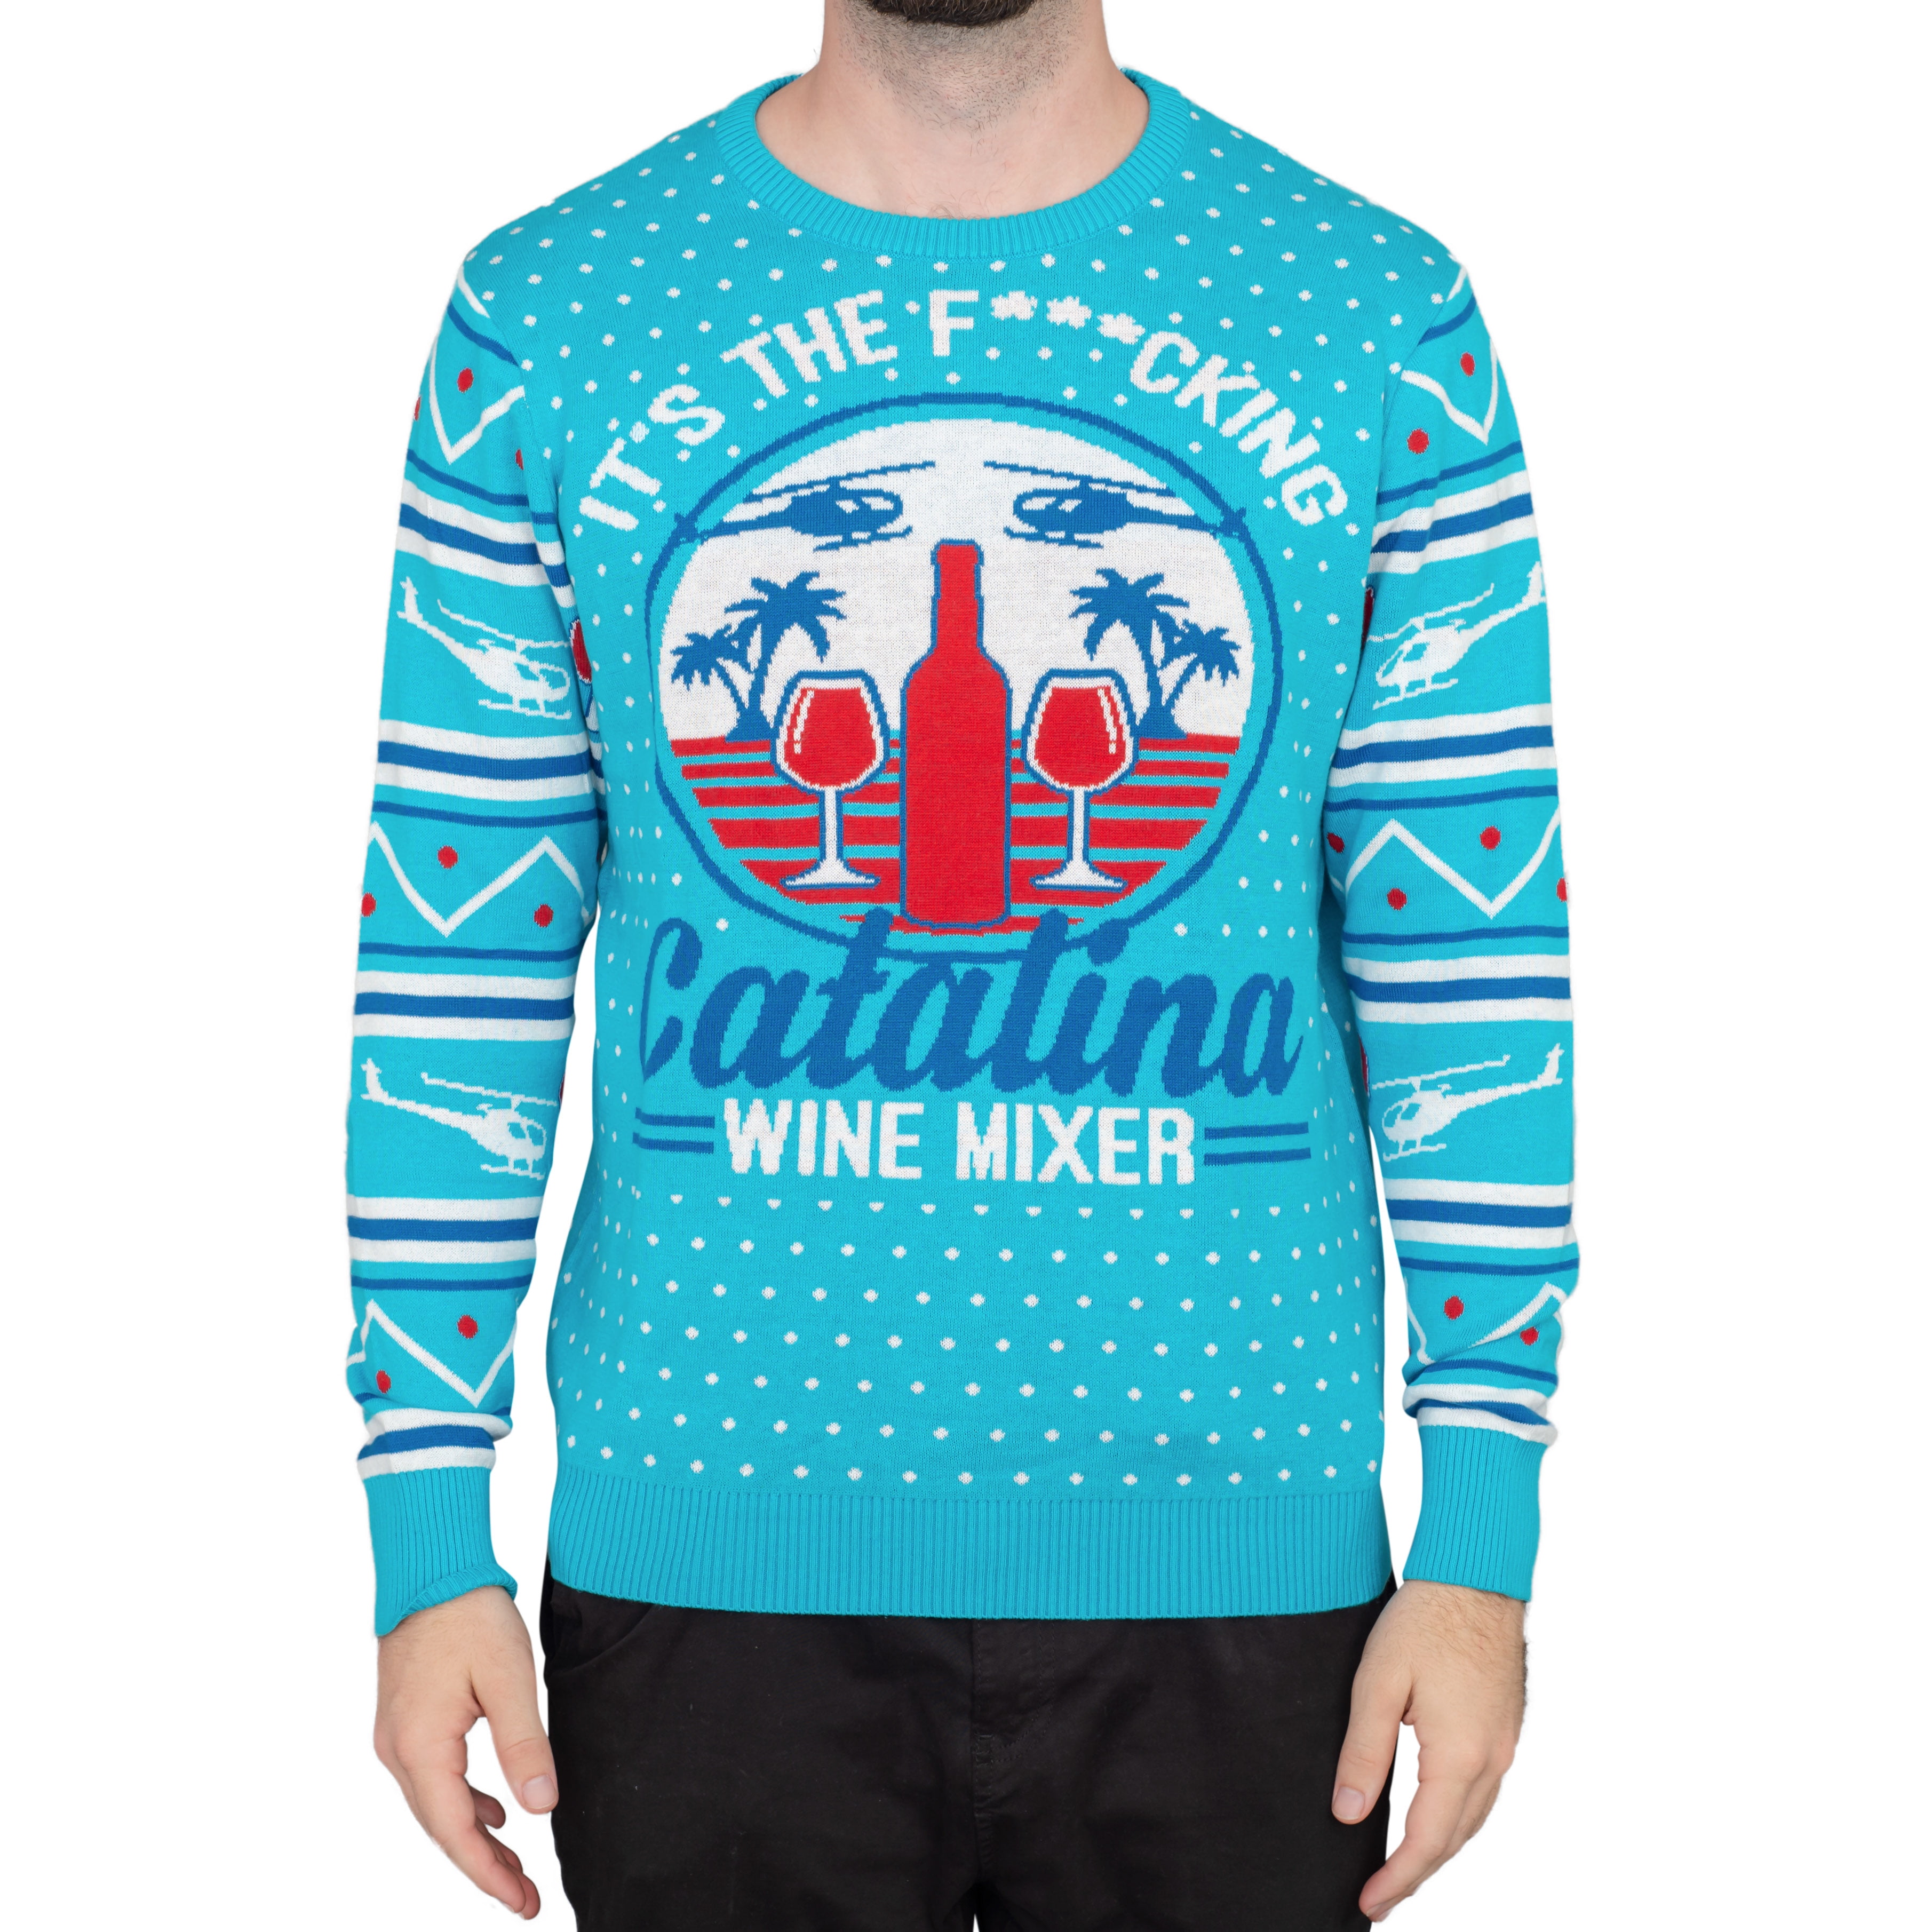 Step Brothers Catalina Wine Mixer Ugly Christmas Sweater - Walmart.com